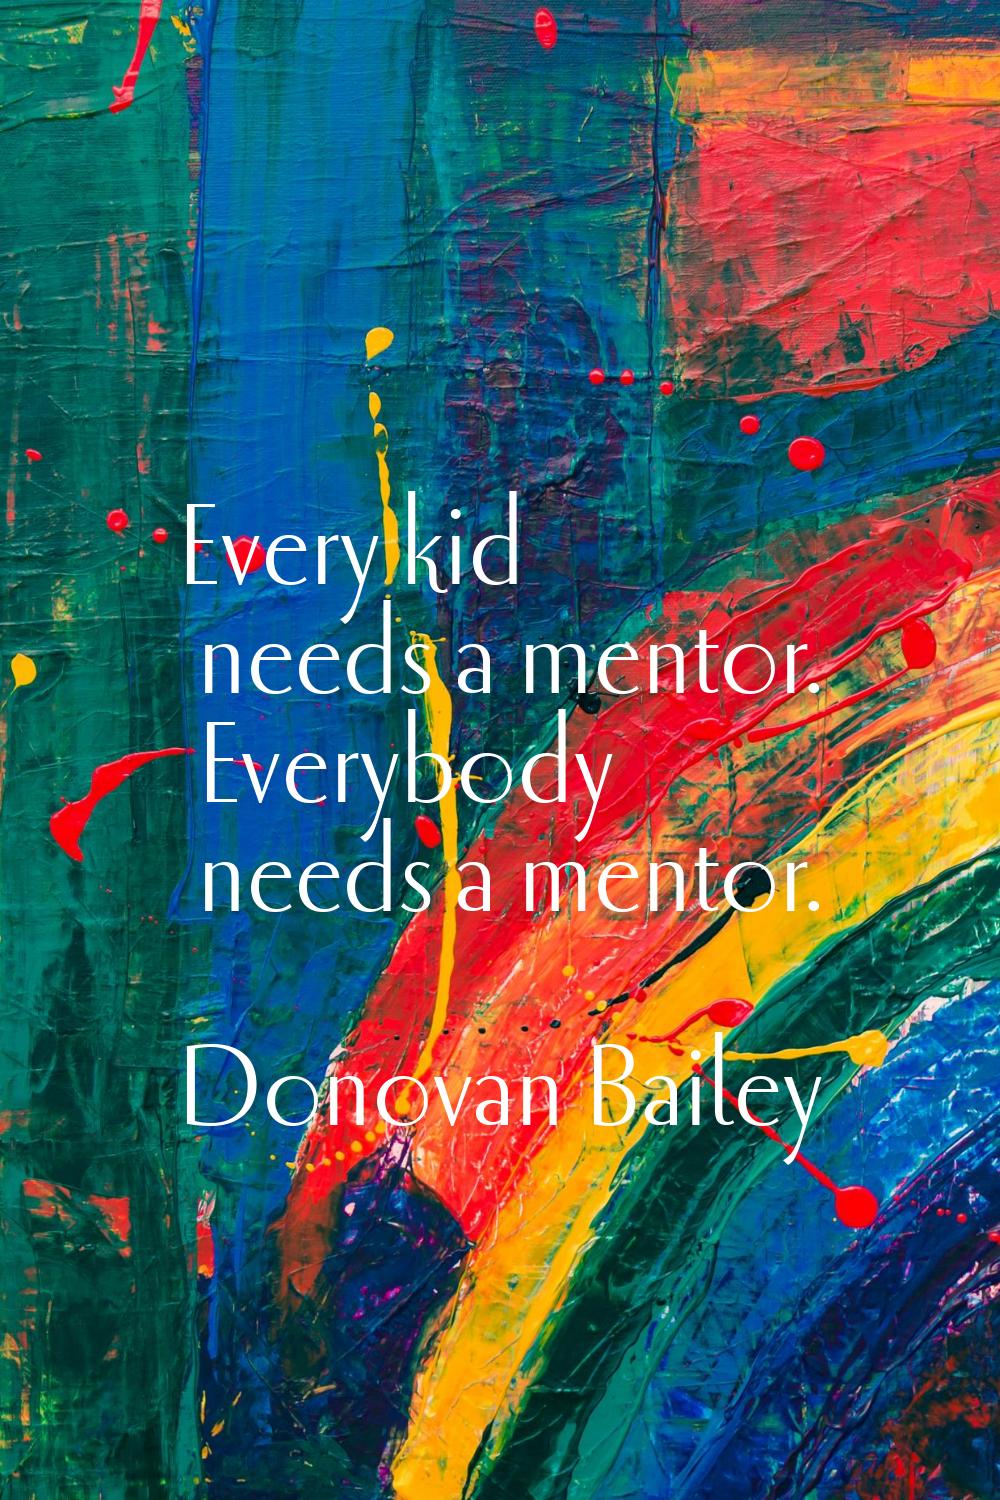 Every kid needs a mentor. Everybody needs a mentor.